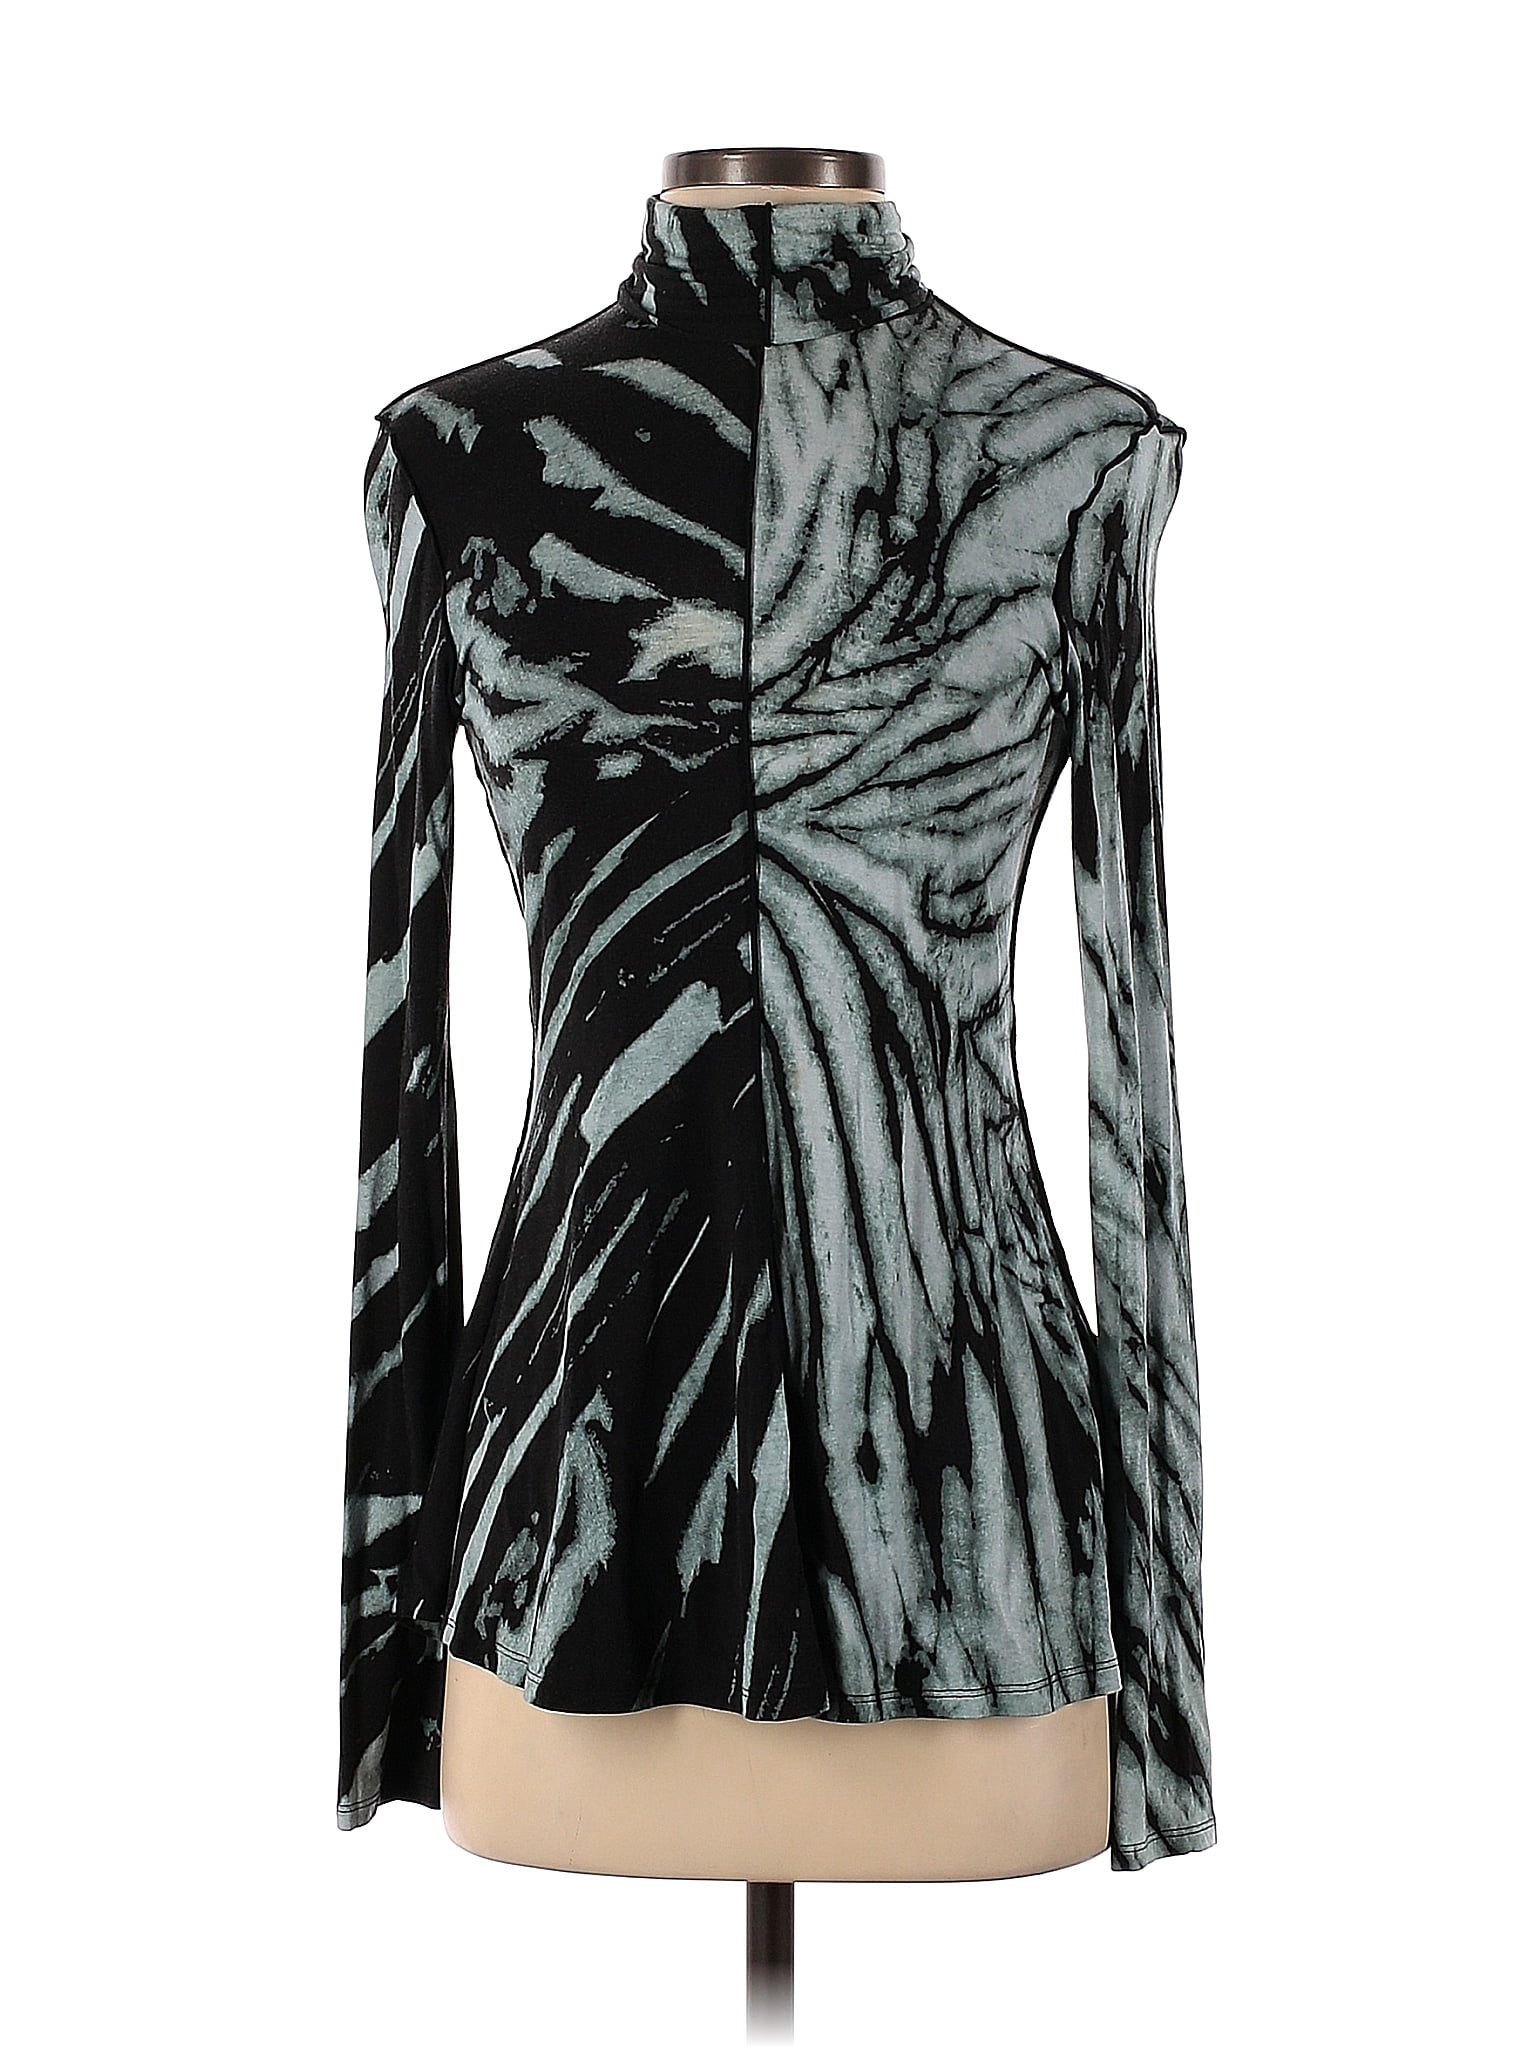 Spiral Tie Dye Jersey Dress by Proenza Schouler White Label for $74